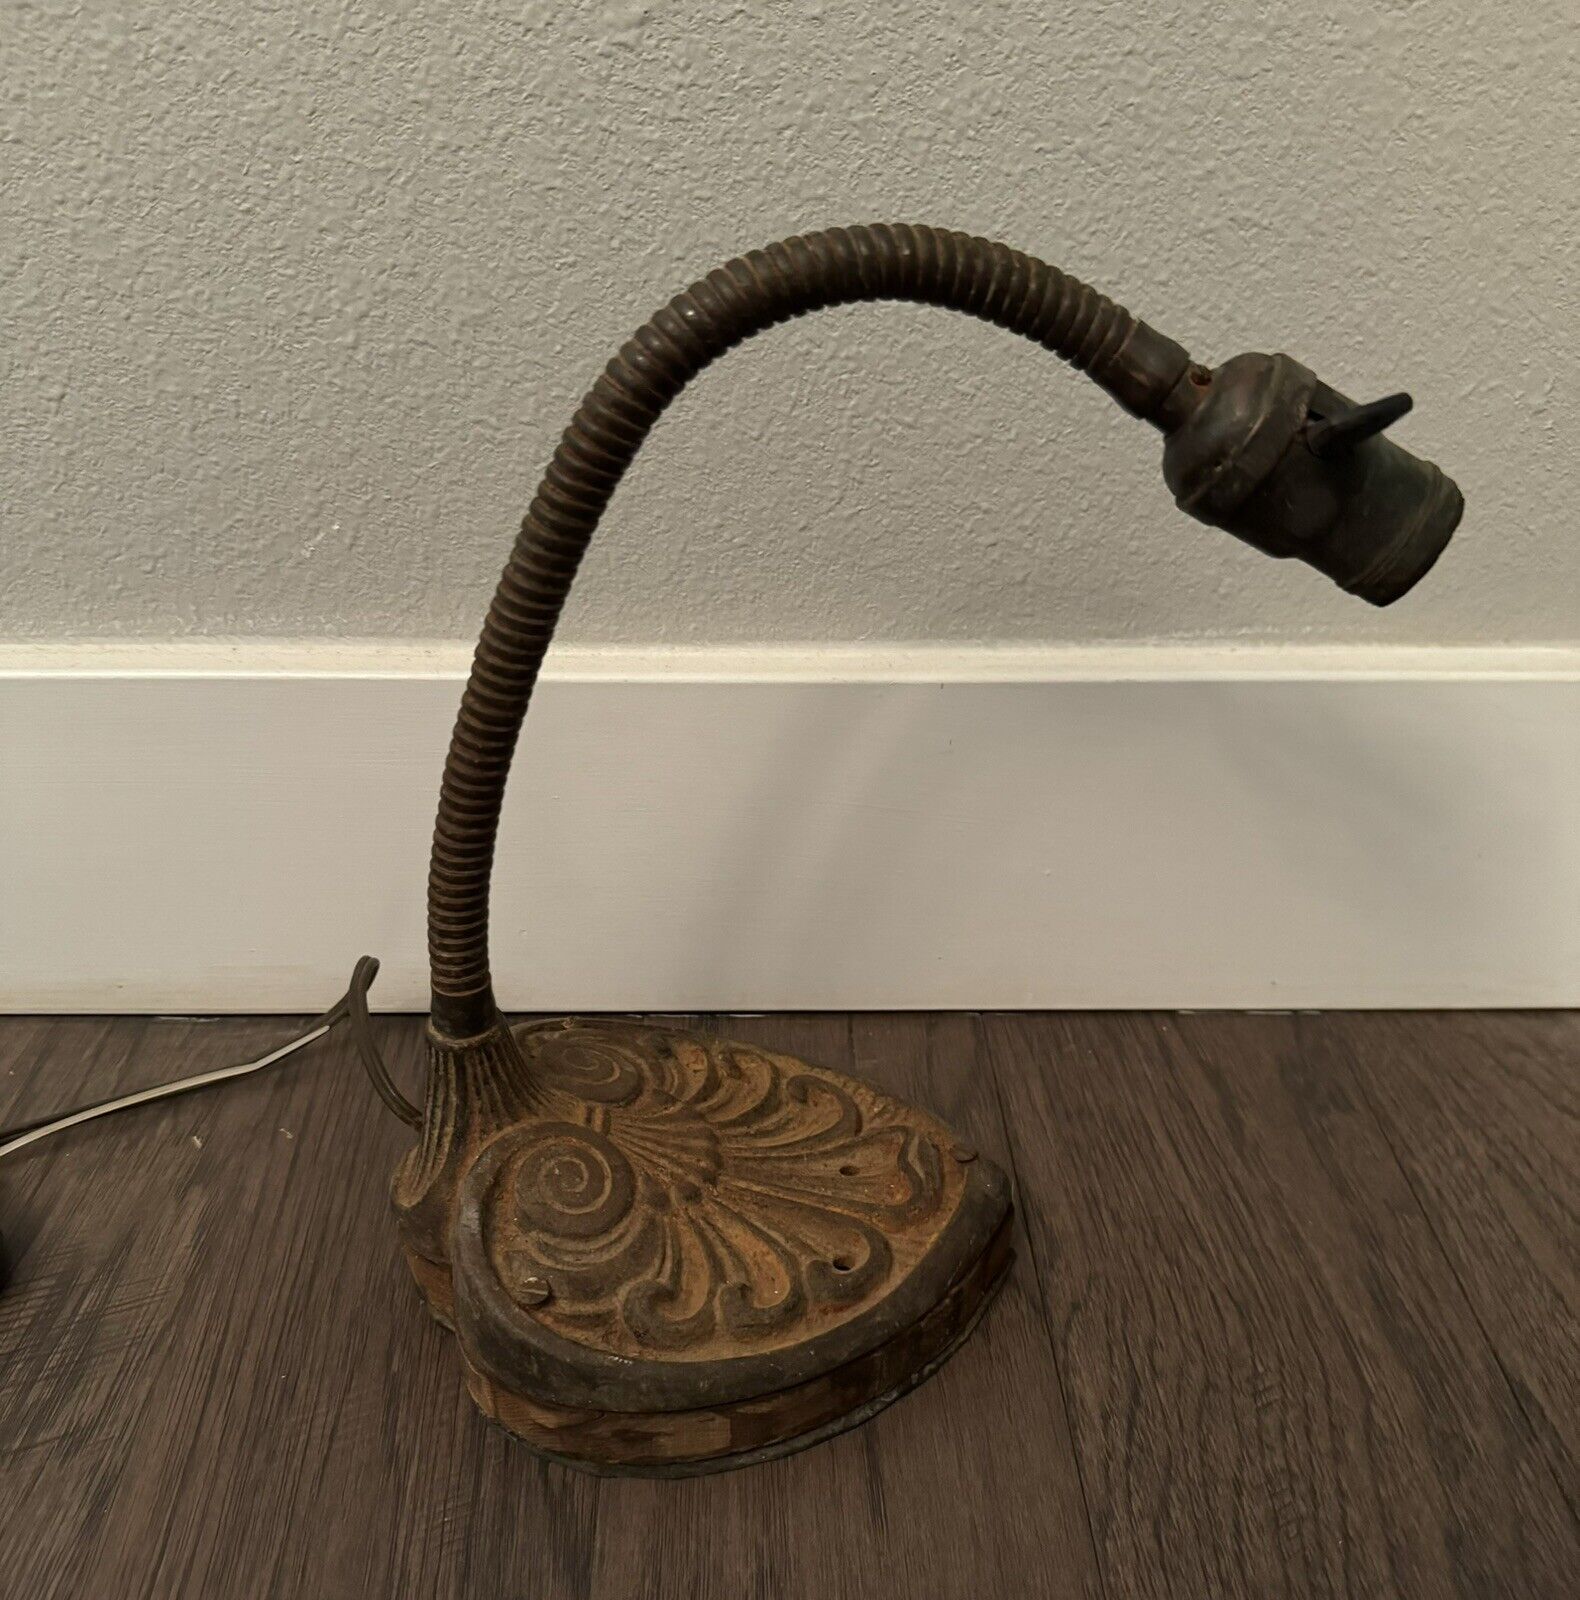 1930’s Vintage Gooseneck Desk or Table Lamp with Ornate Base NO SHADE